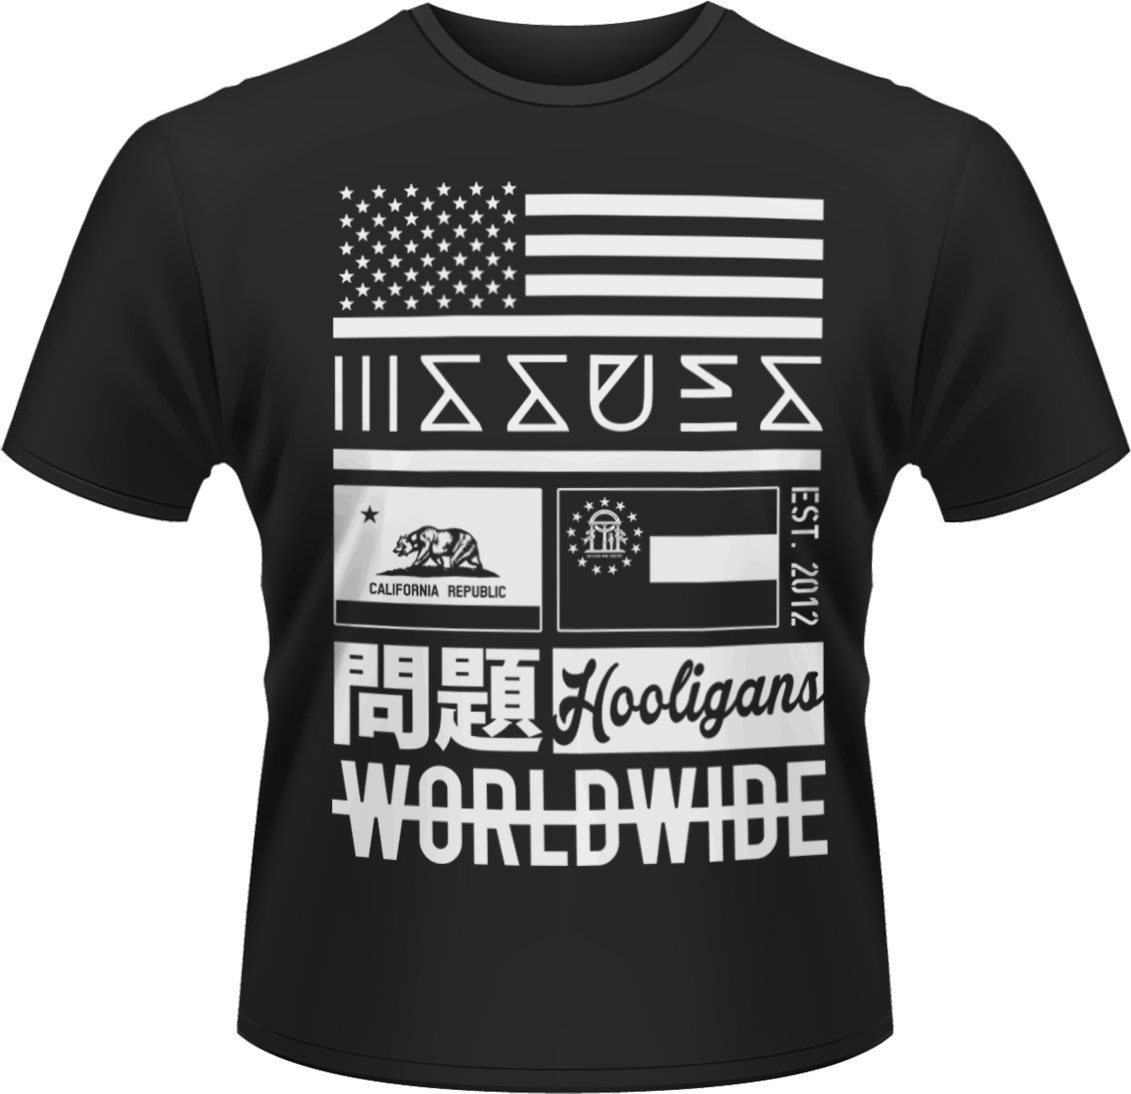 T-shirt Issues T-shirt Worldwide Preto L